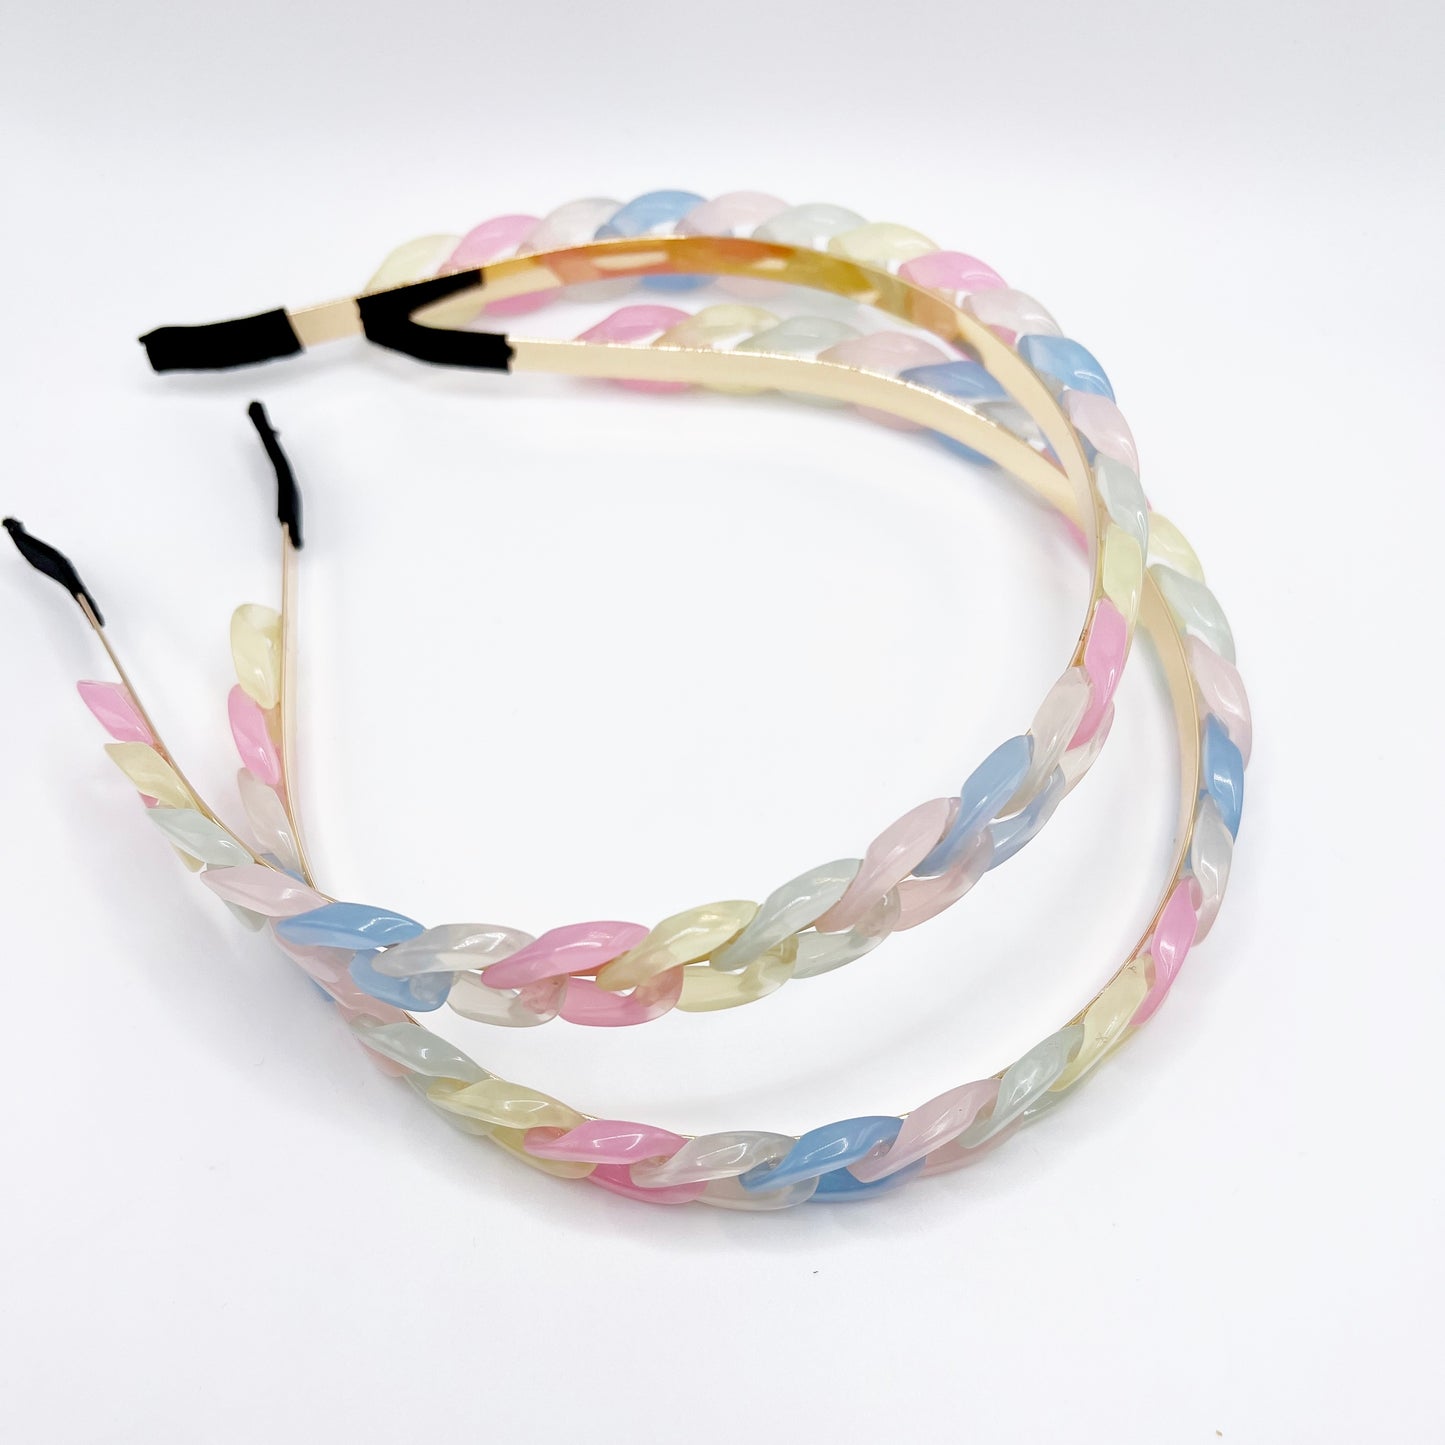 Rainbow chainlink headband